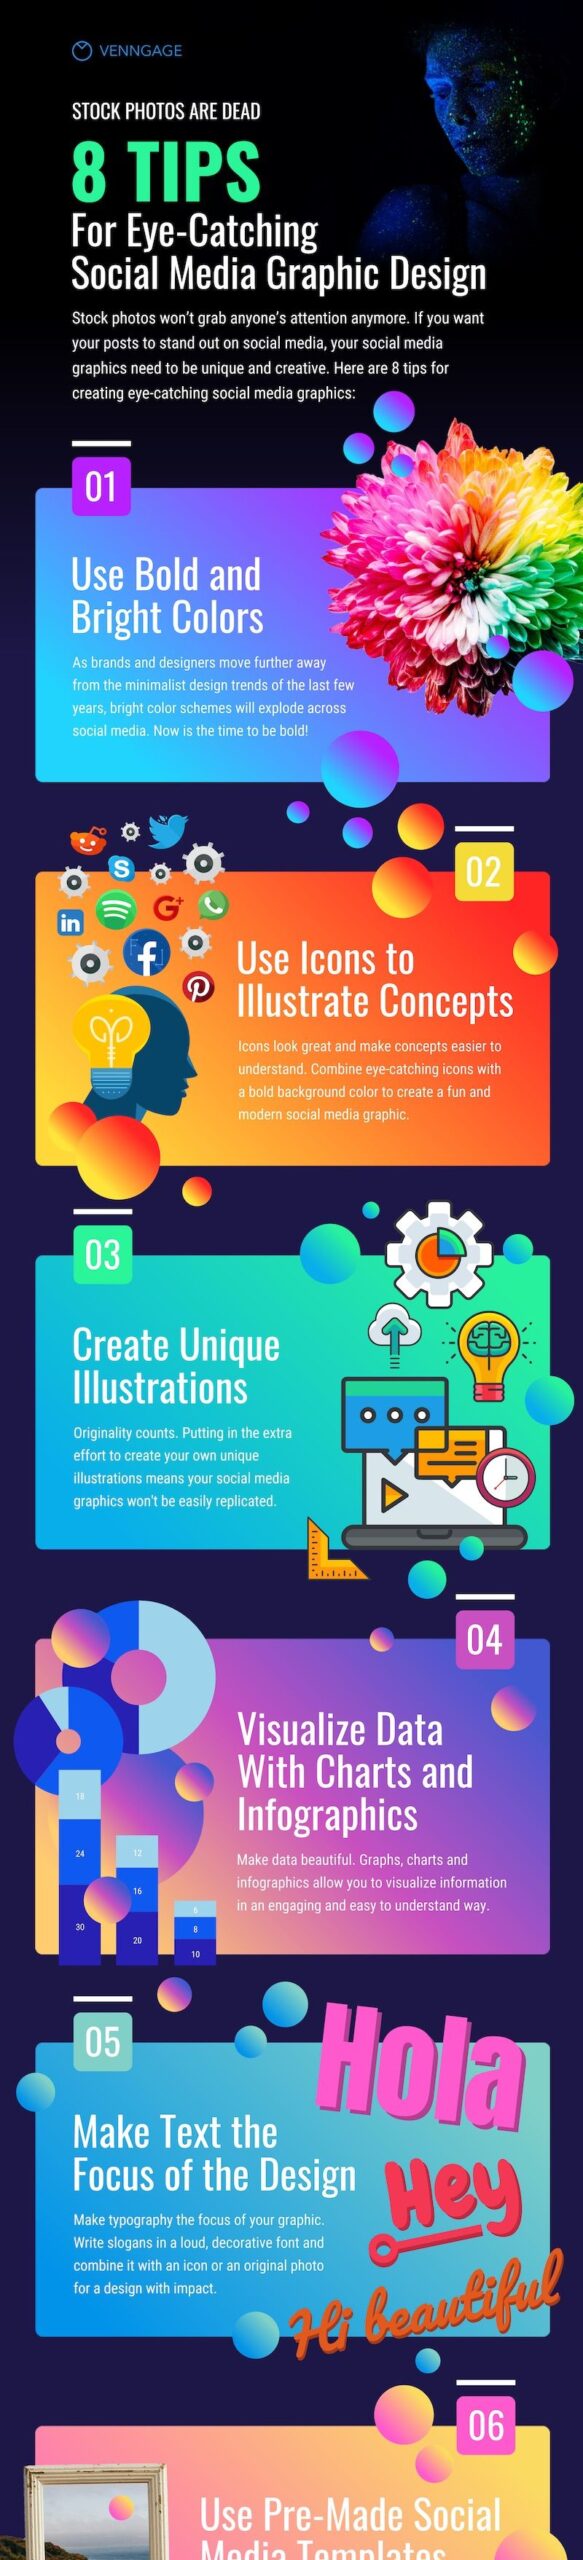 10 Useful and Inspirational Infographic Designs | Design3edge.com